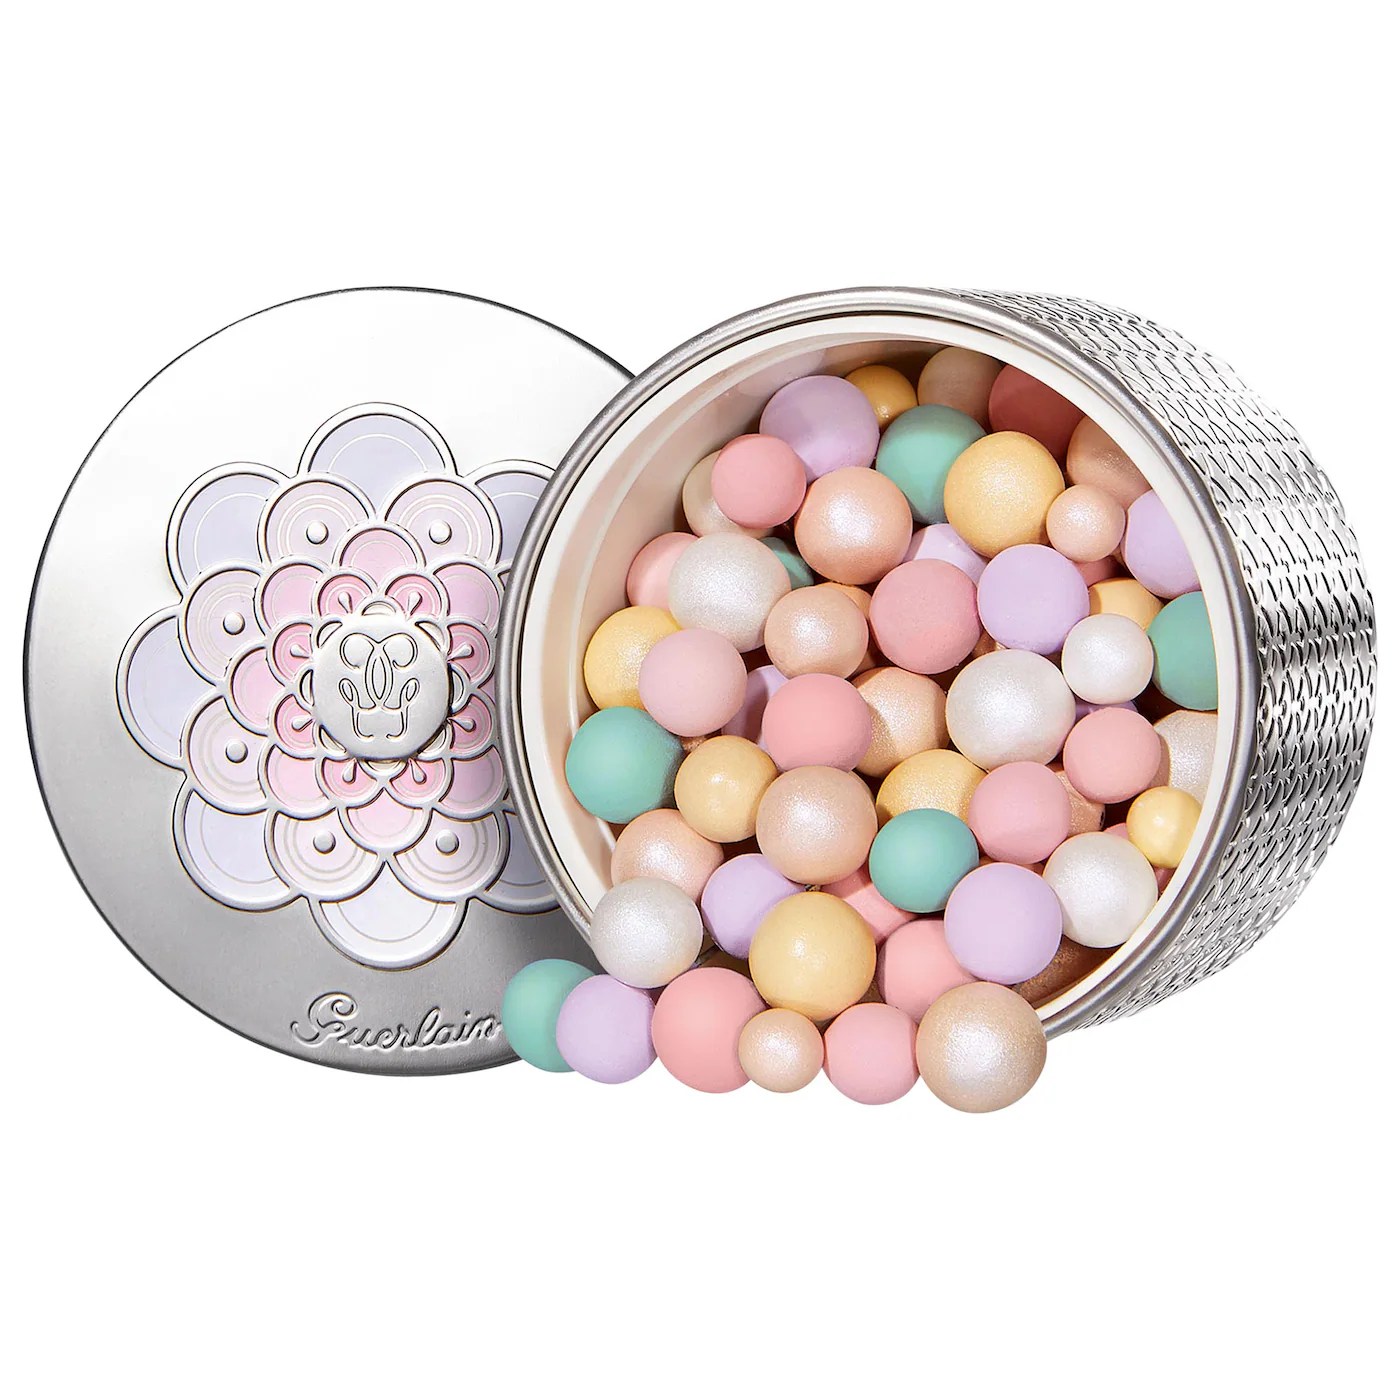 multicolored pearls of guerlain metorite powder